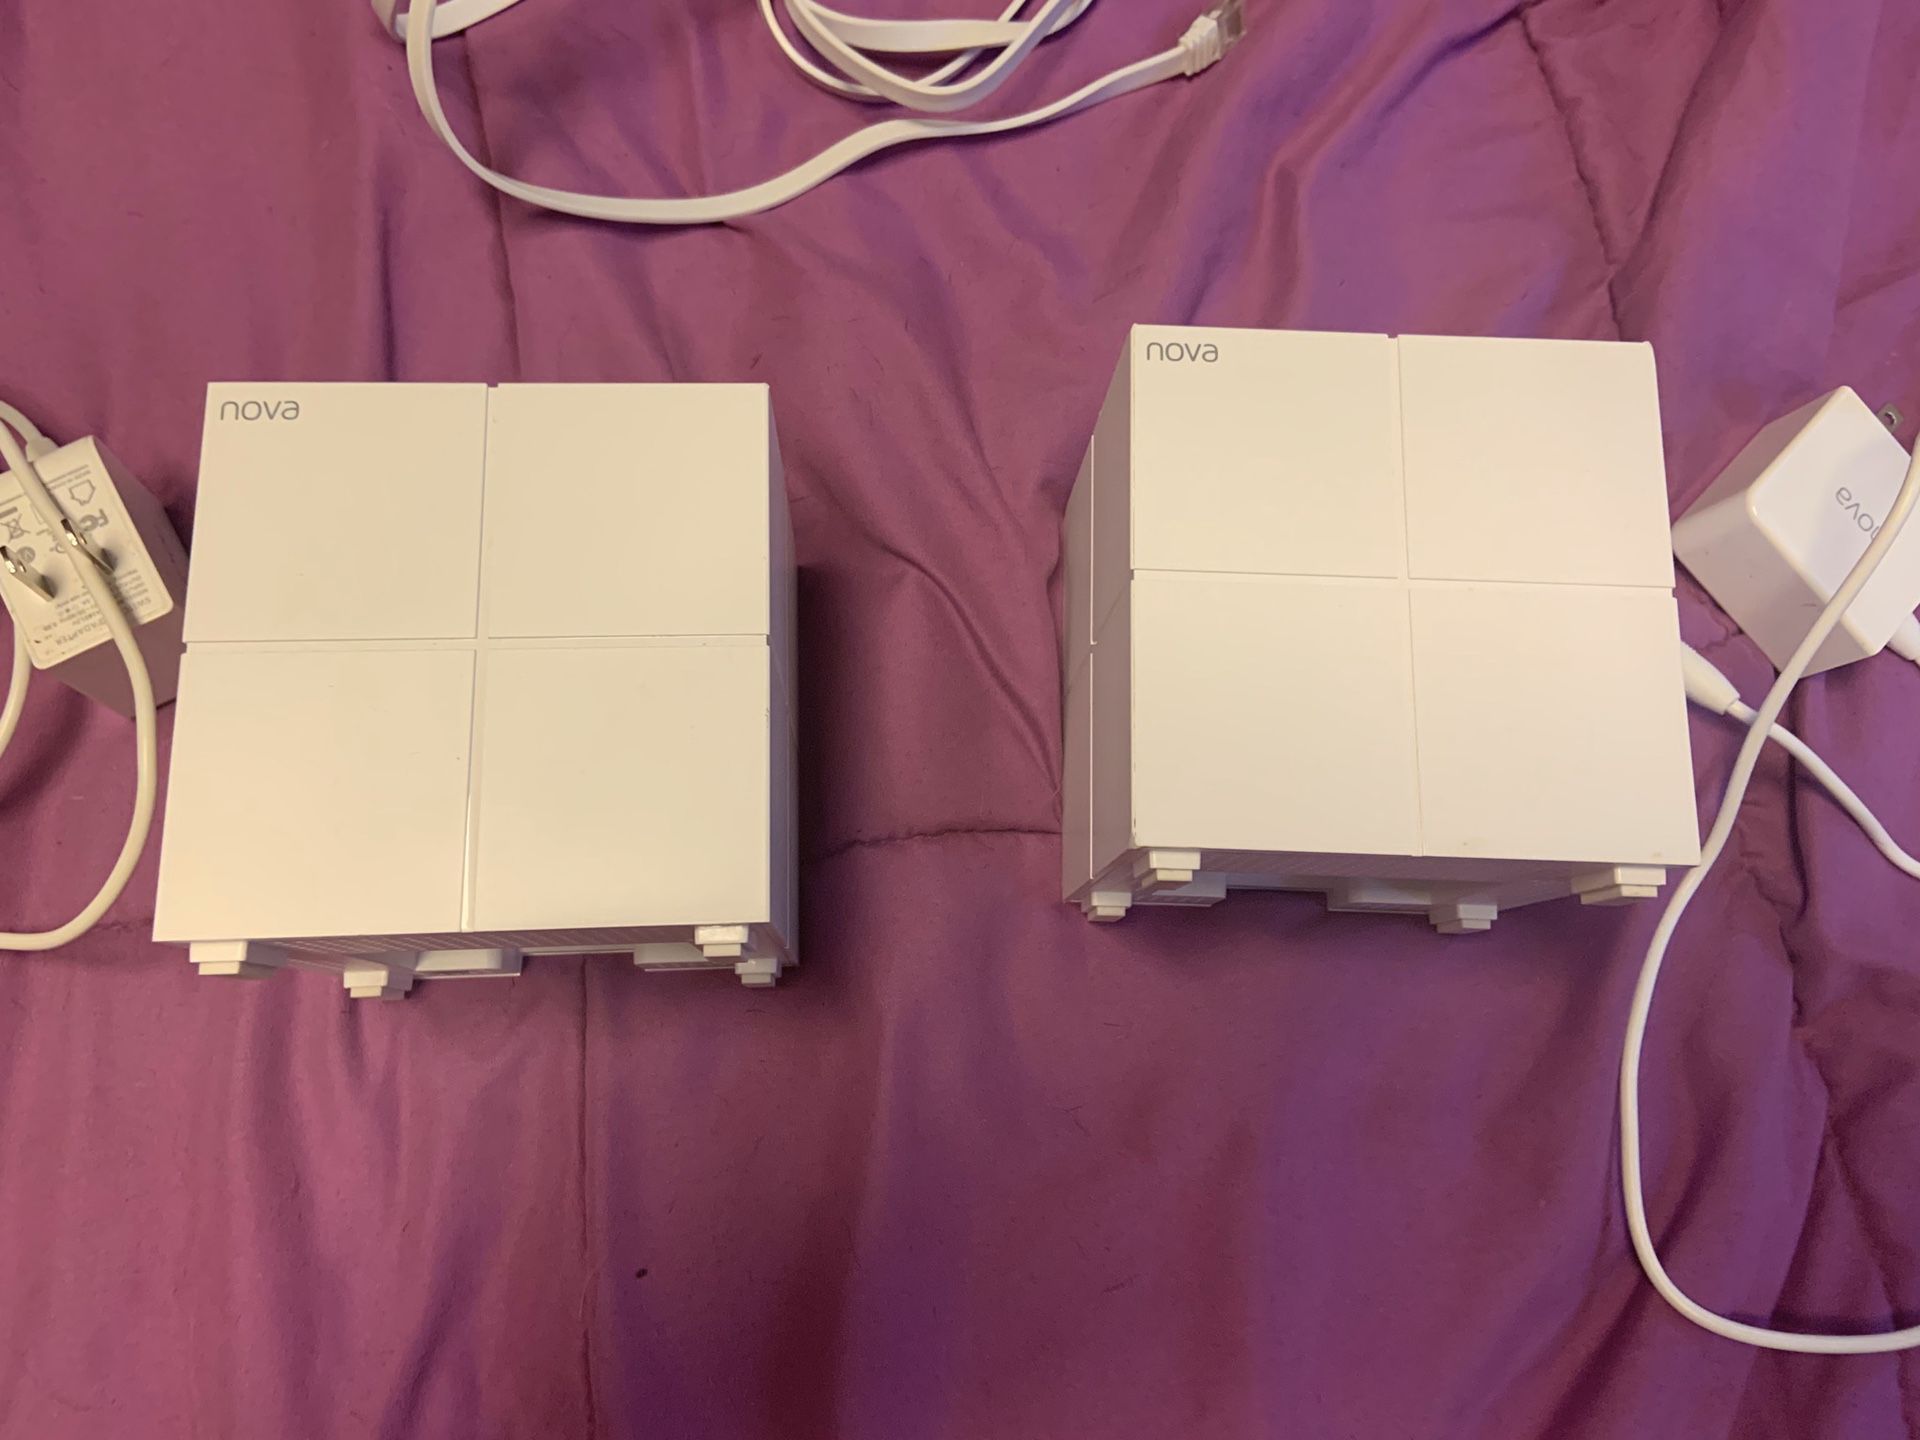 Tenda Nova Mesh WiFi Router System